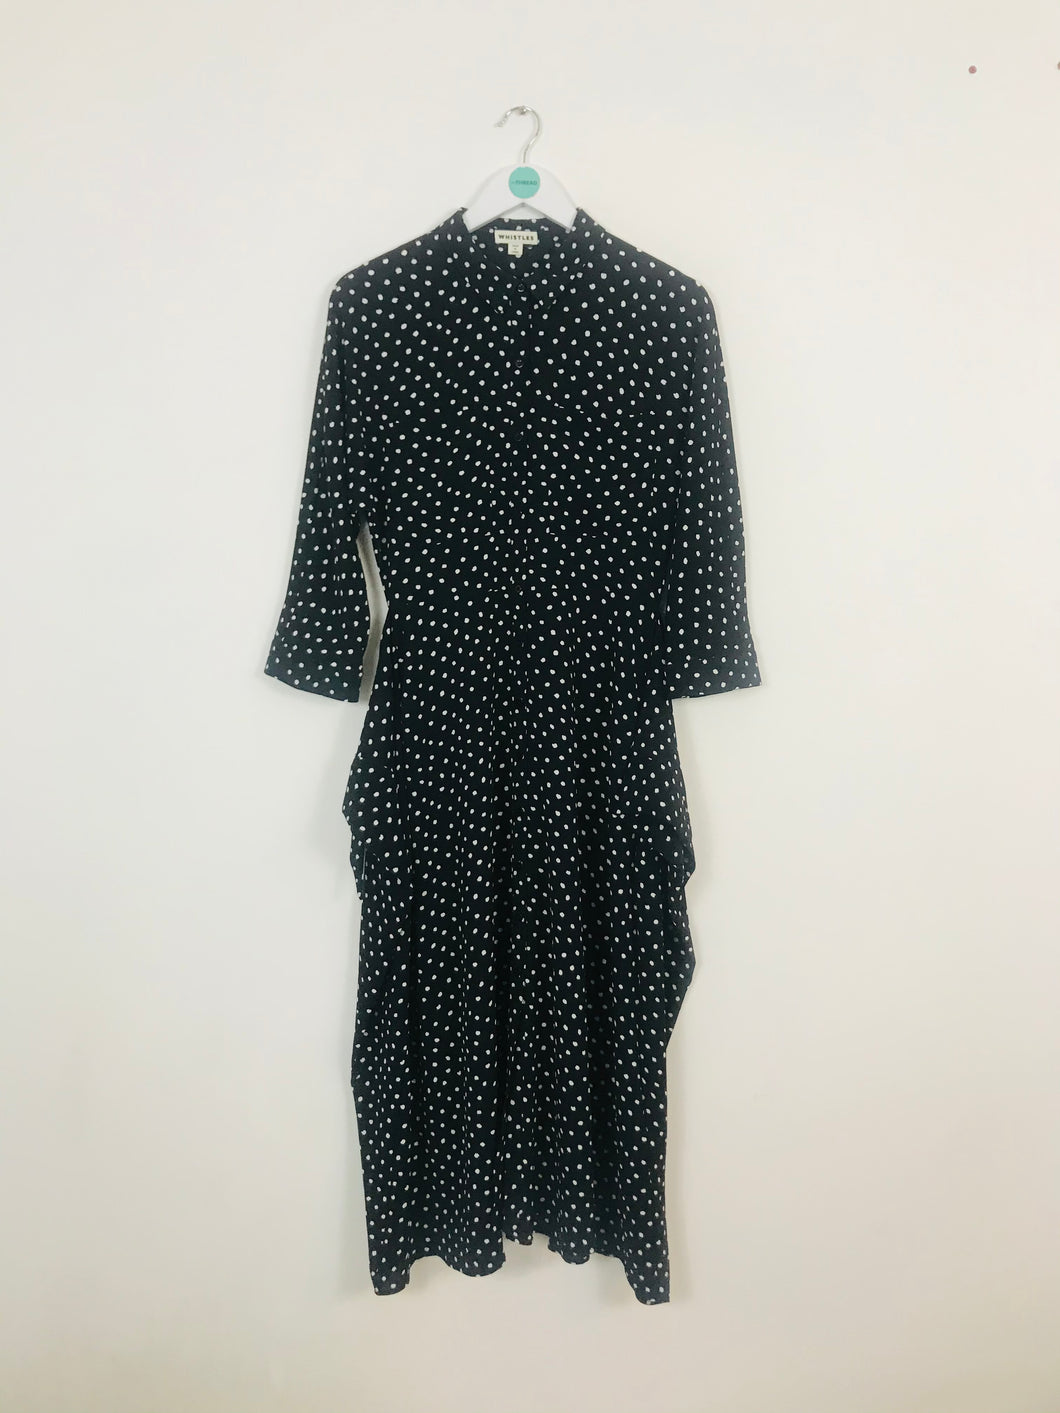 Whistles Women’s Polka Dot Shirt Style Maxi Dress | UK 10 | Black